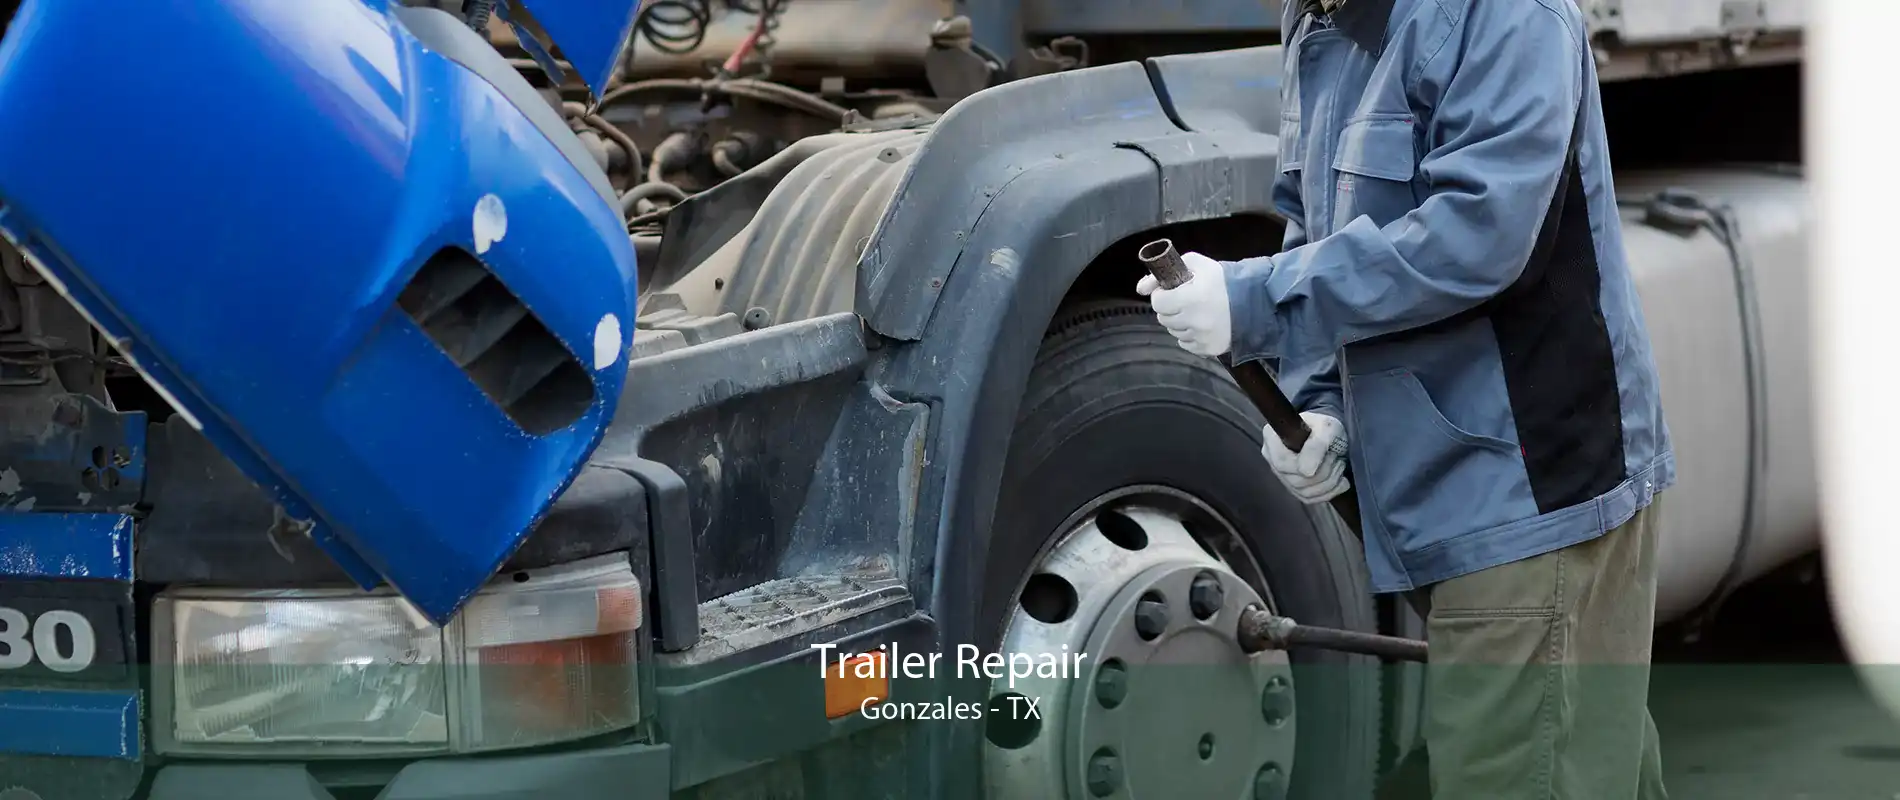 Trailer Repair Gonzales - TX